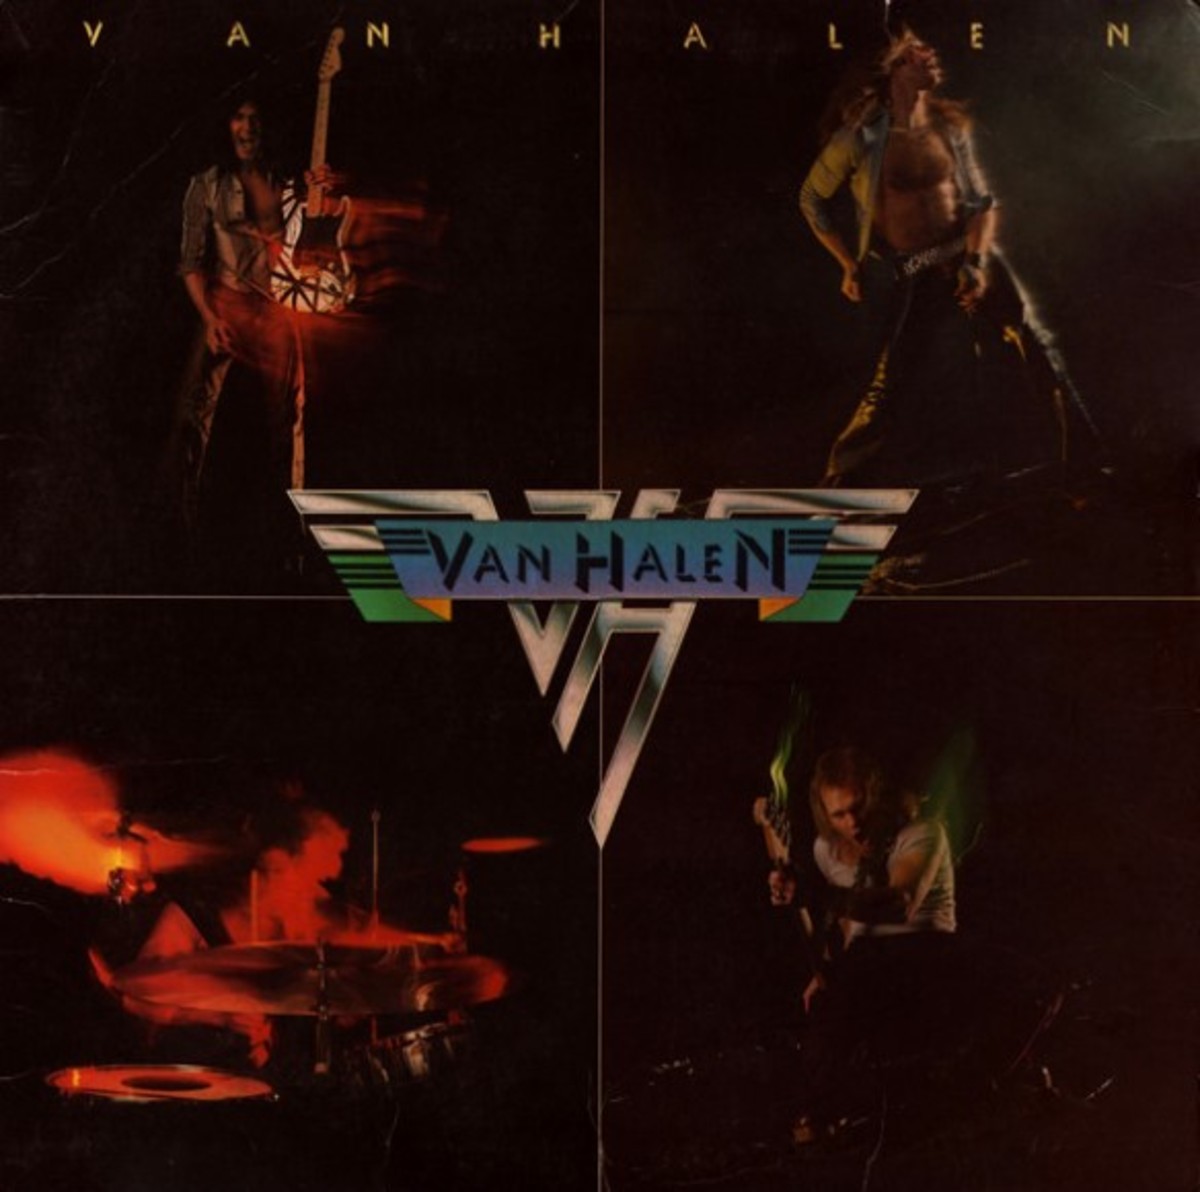 Eddie Van Halen debut